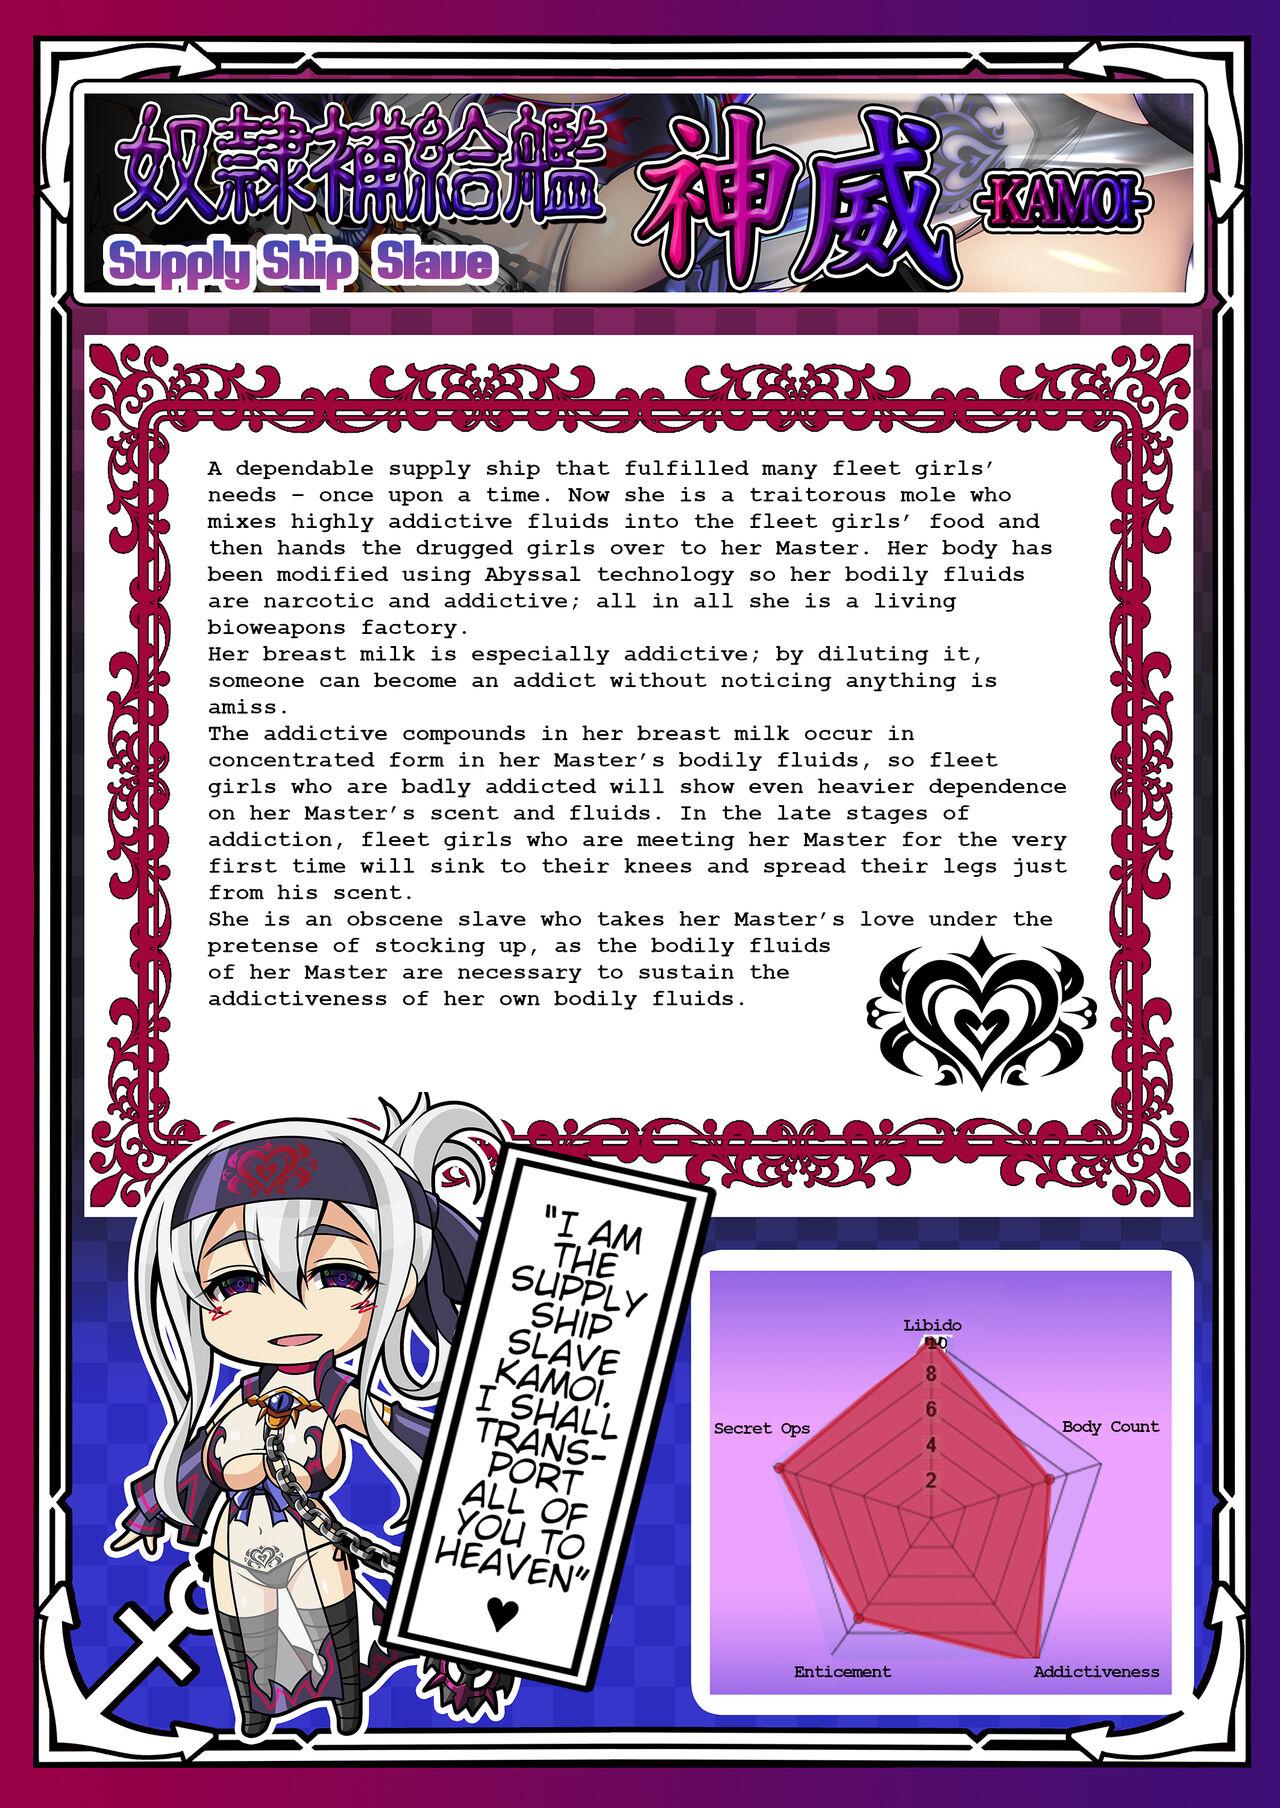 Akuochi Kanmusu Meikan + Akuochi Kanmusu Meikan Ni 1& 2 | Corrupted Fleet Girl Files Dossier #1 + 2.1 + 2.2 98